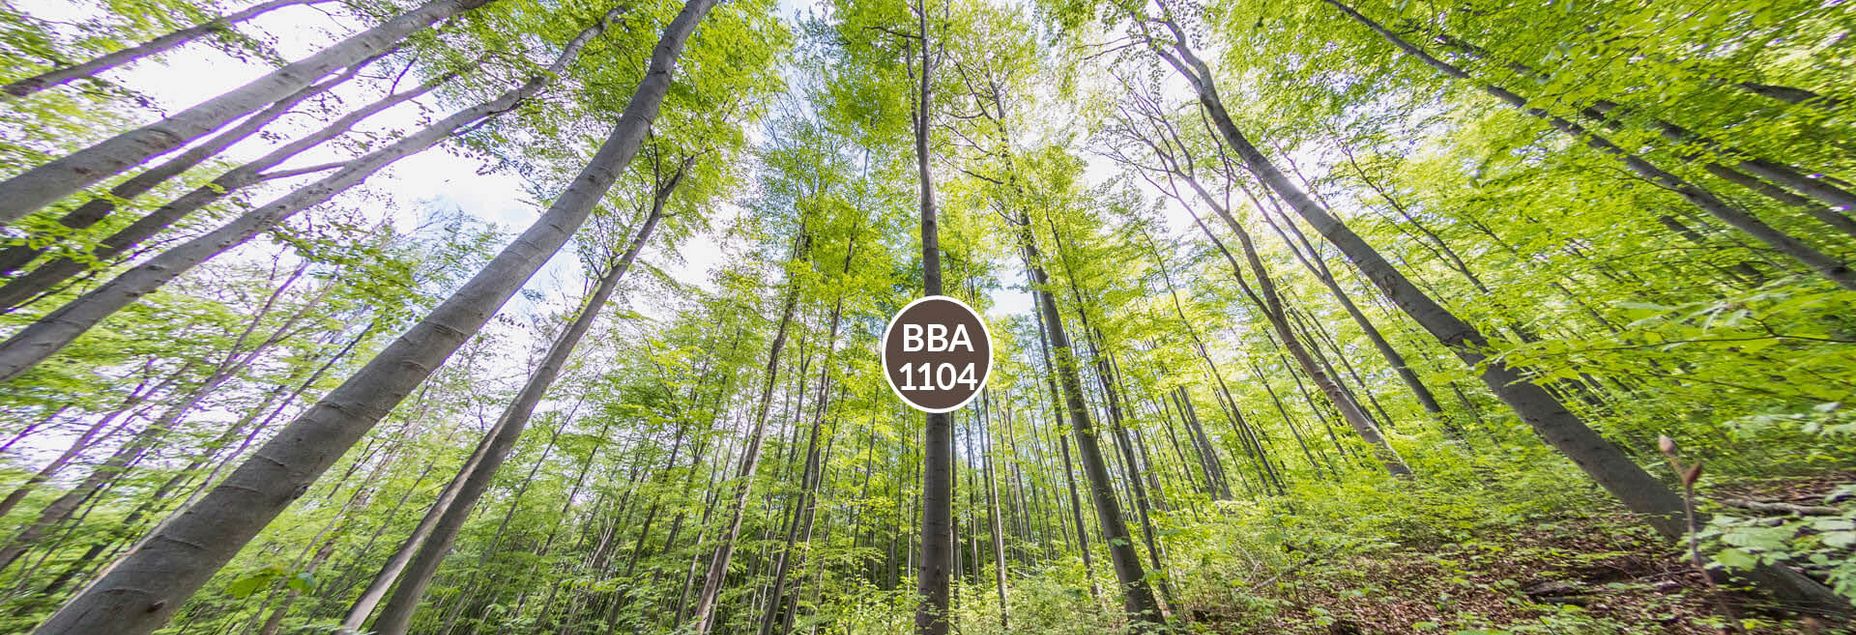 Baum BBA 1104 - Fisheyeperspektive